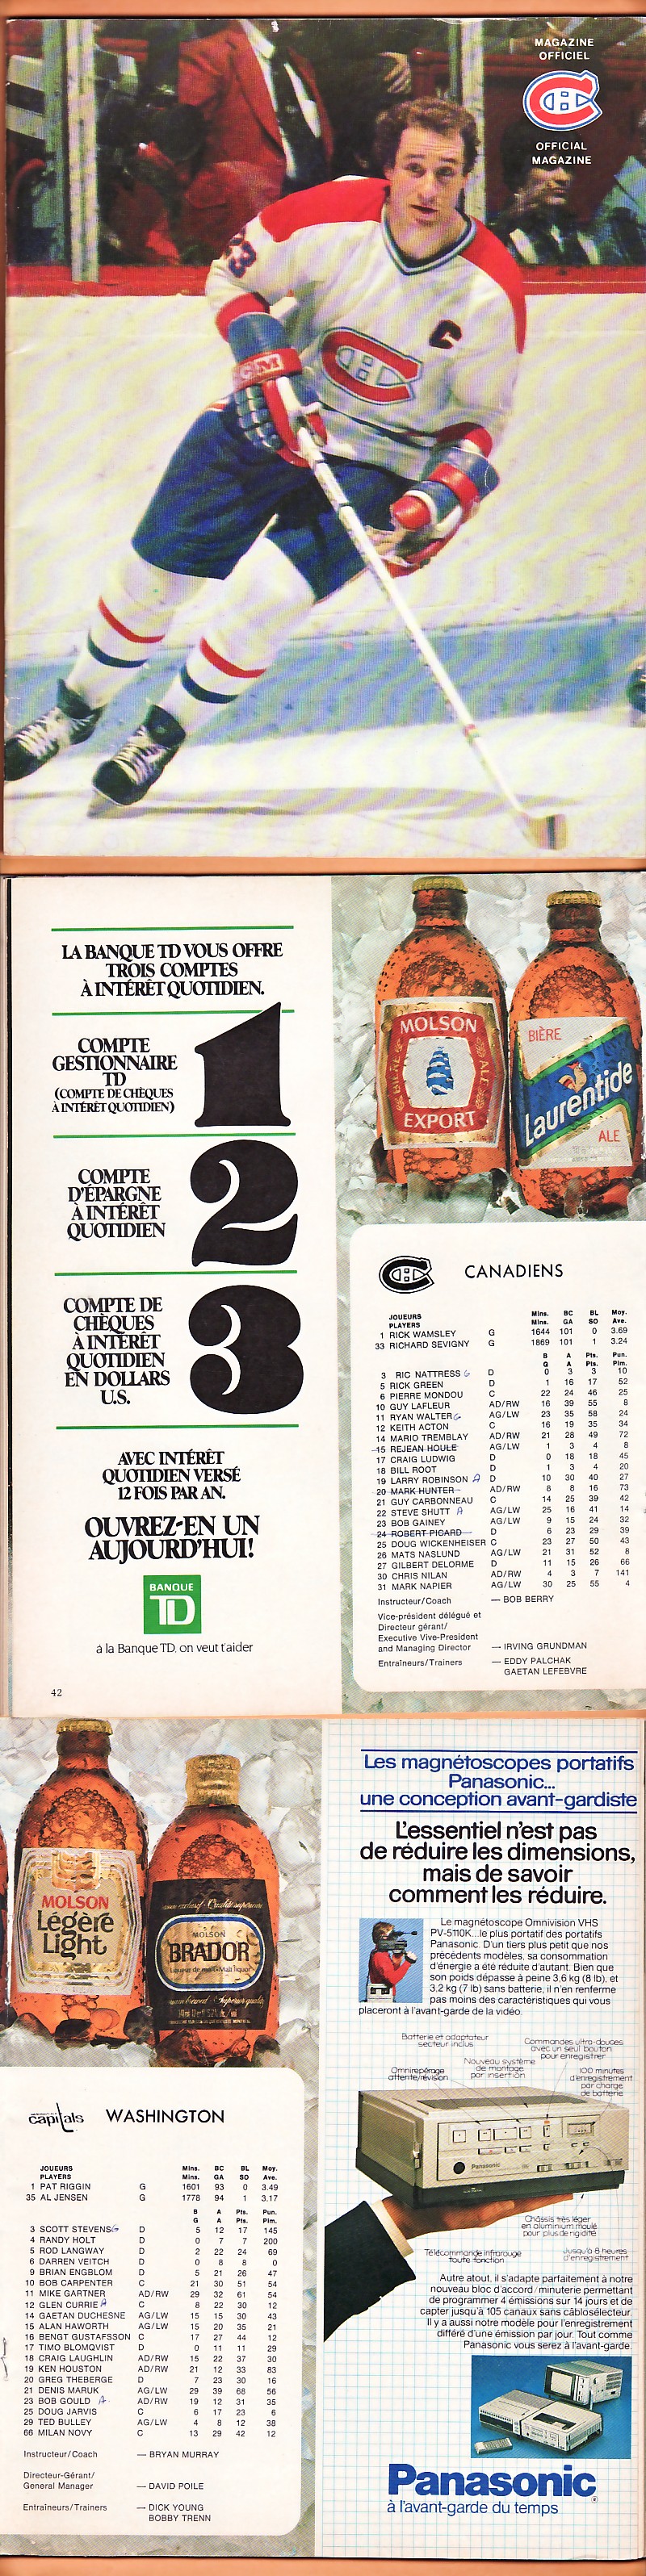 1982 MONTREAL CANADIENS VS WASHINGTON CAPITALS PROGRAM photo